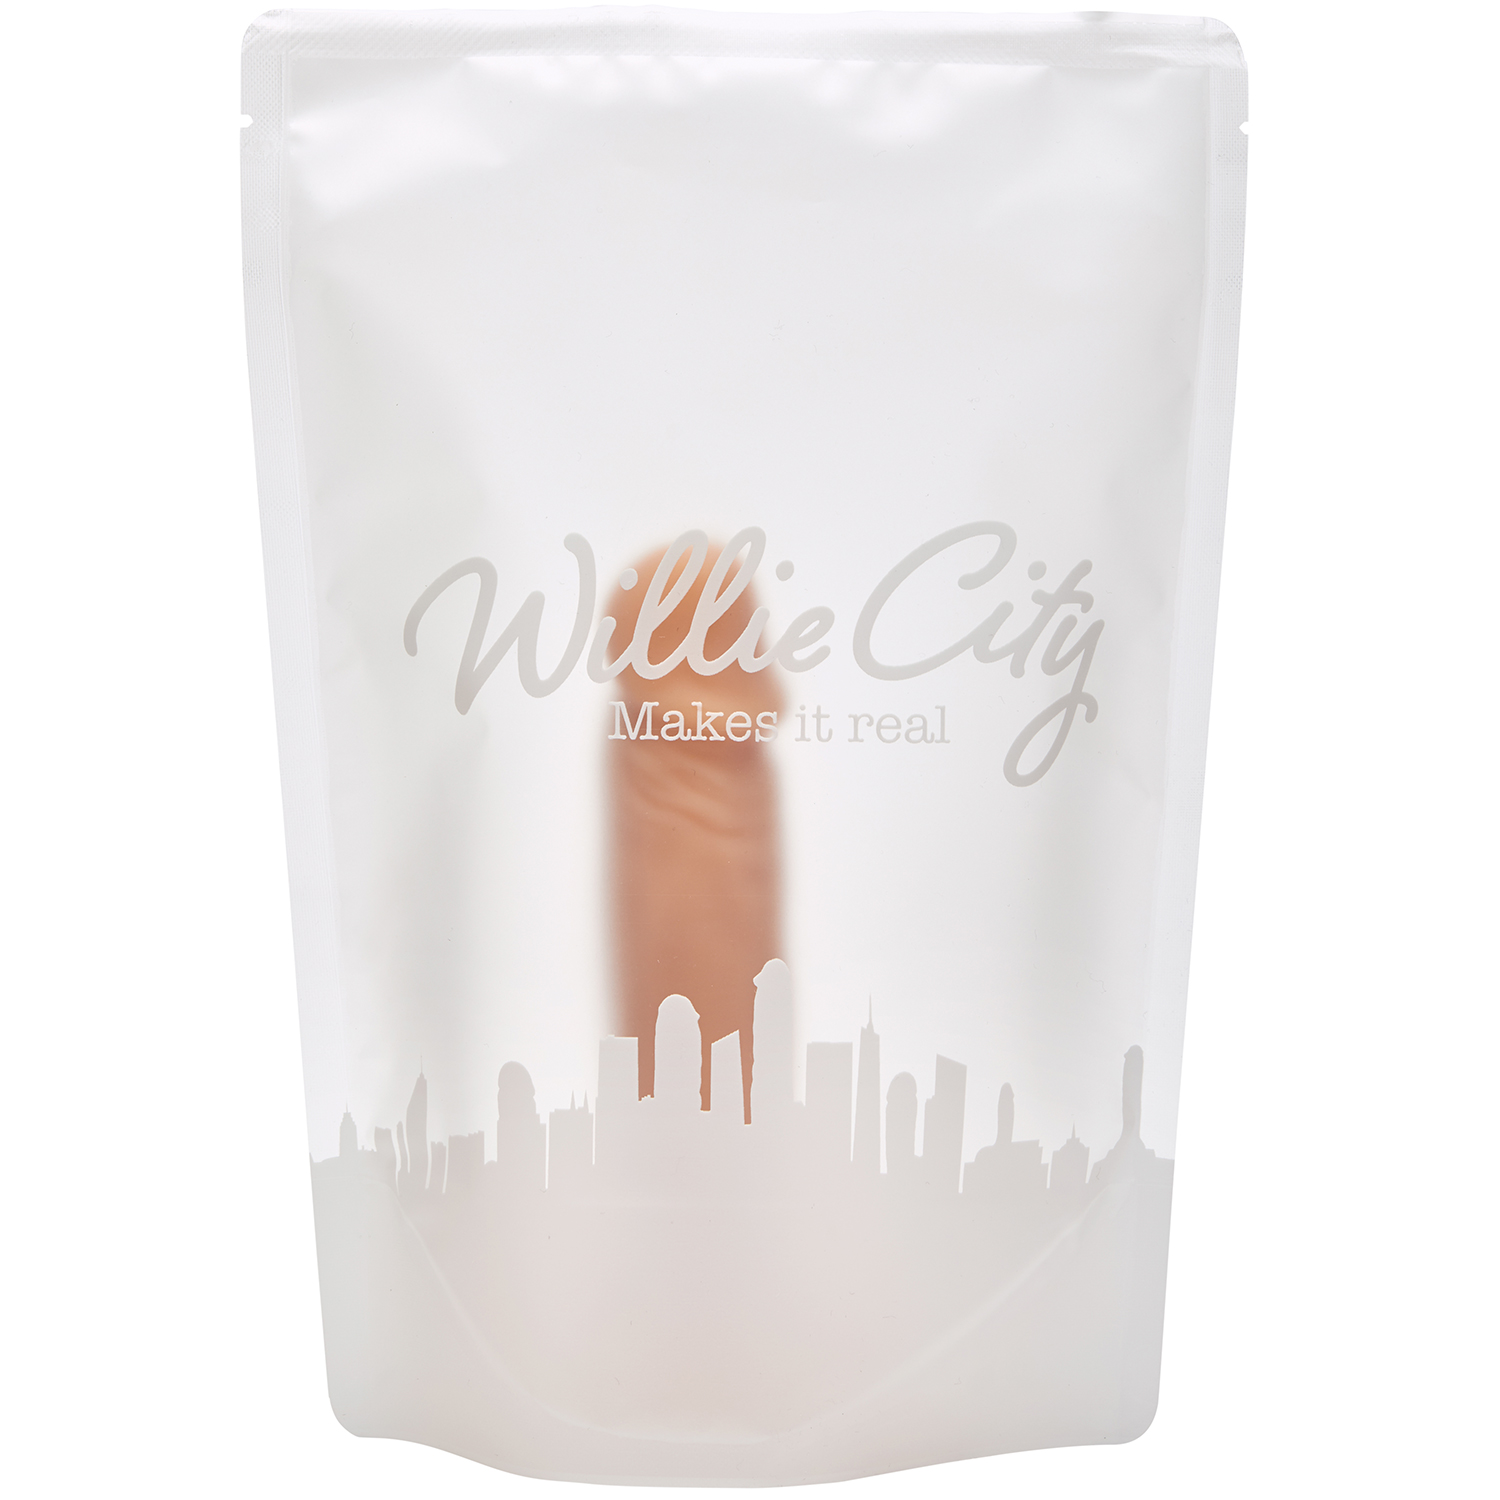 Willie City Willie City Luxe Realistisk Silikondildo med Sugekopp 15 cm - Beige